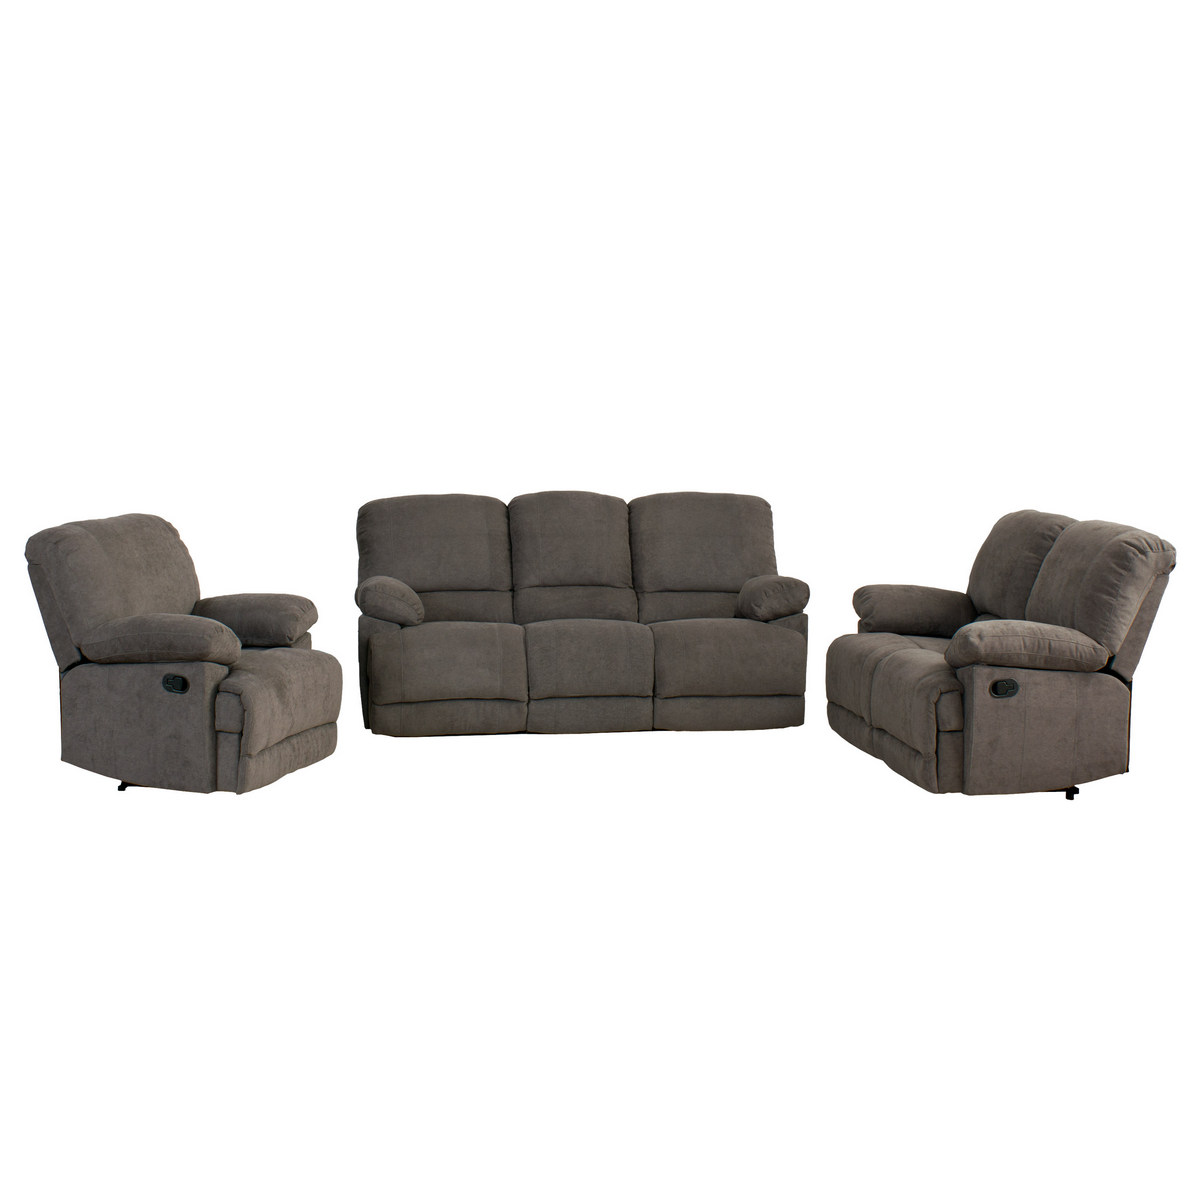 Corliving Lzy-331-z1 Lea 3pc Grey Chenille Fabric Reclining Sofa Set